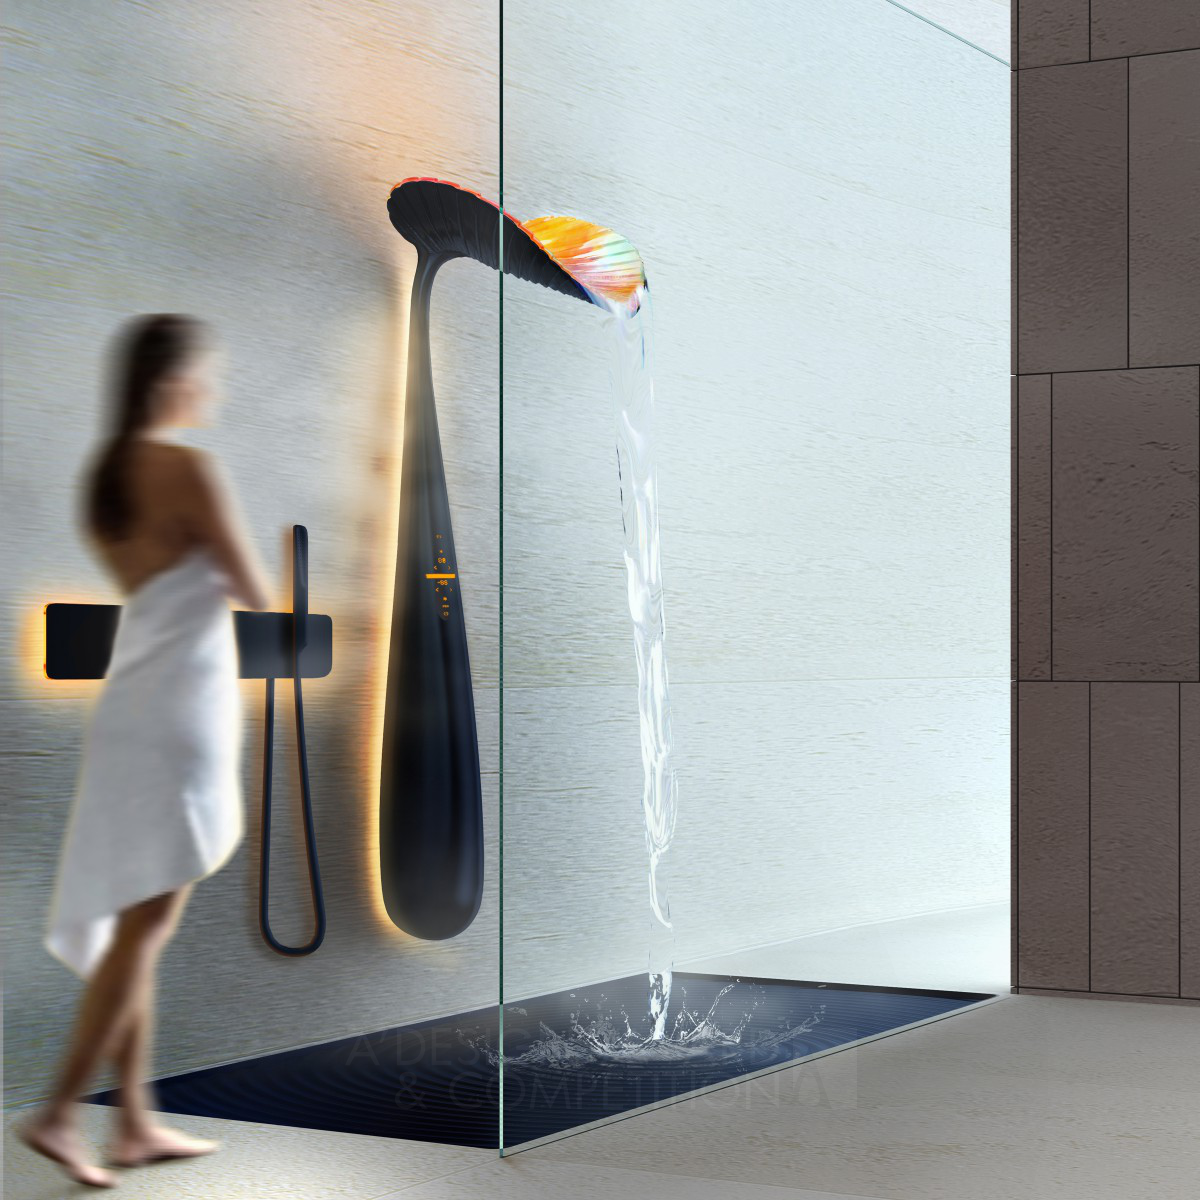 Ora Shower panel by Vladimir Polikarpov